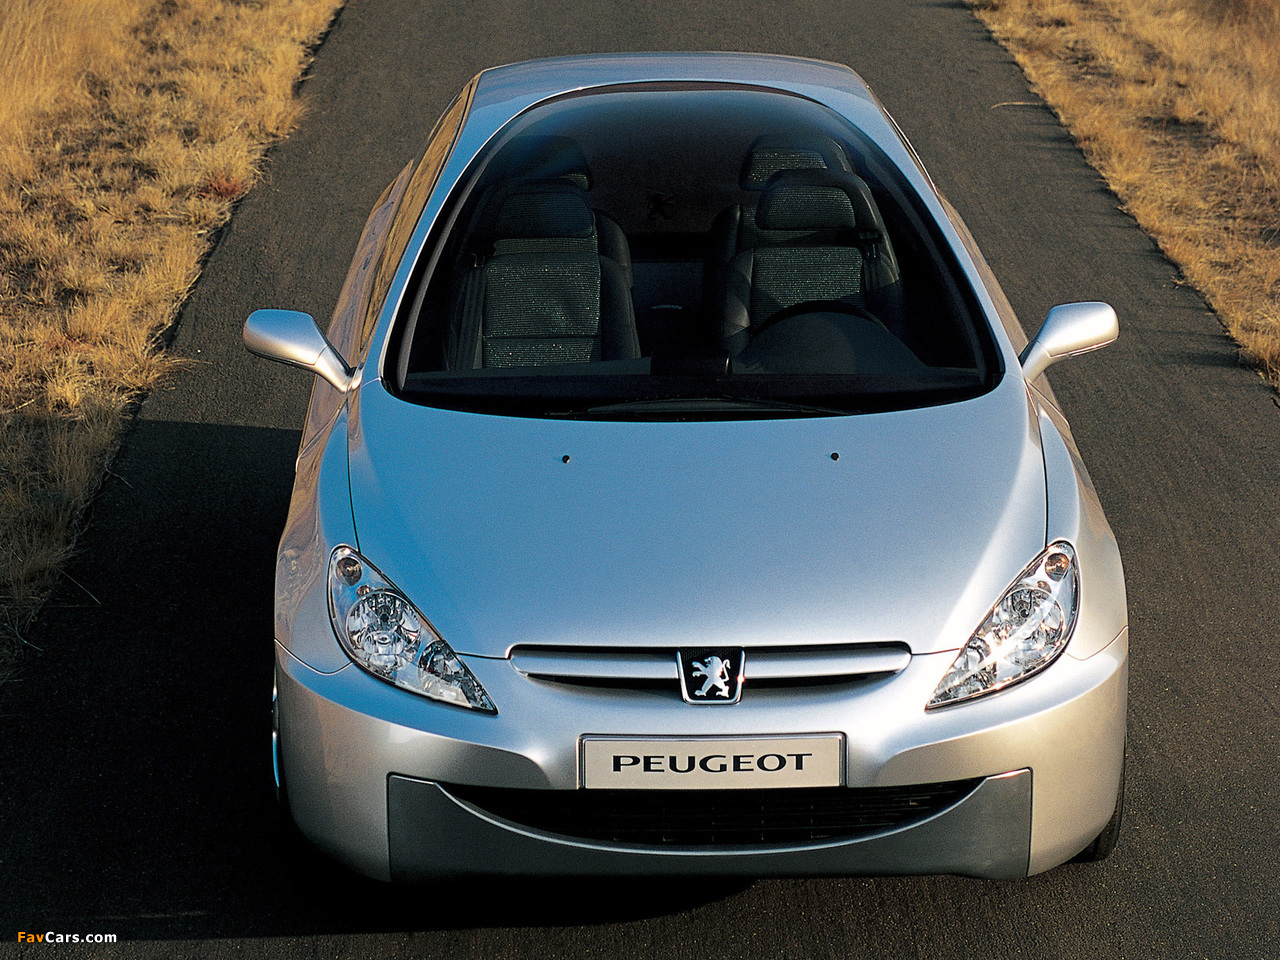 Peugeot Promethee Concept 2000 pictures (1280 x 960)